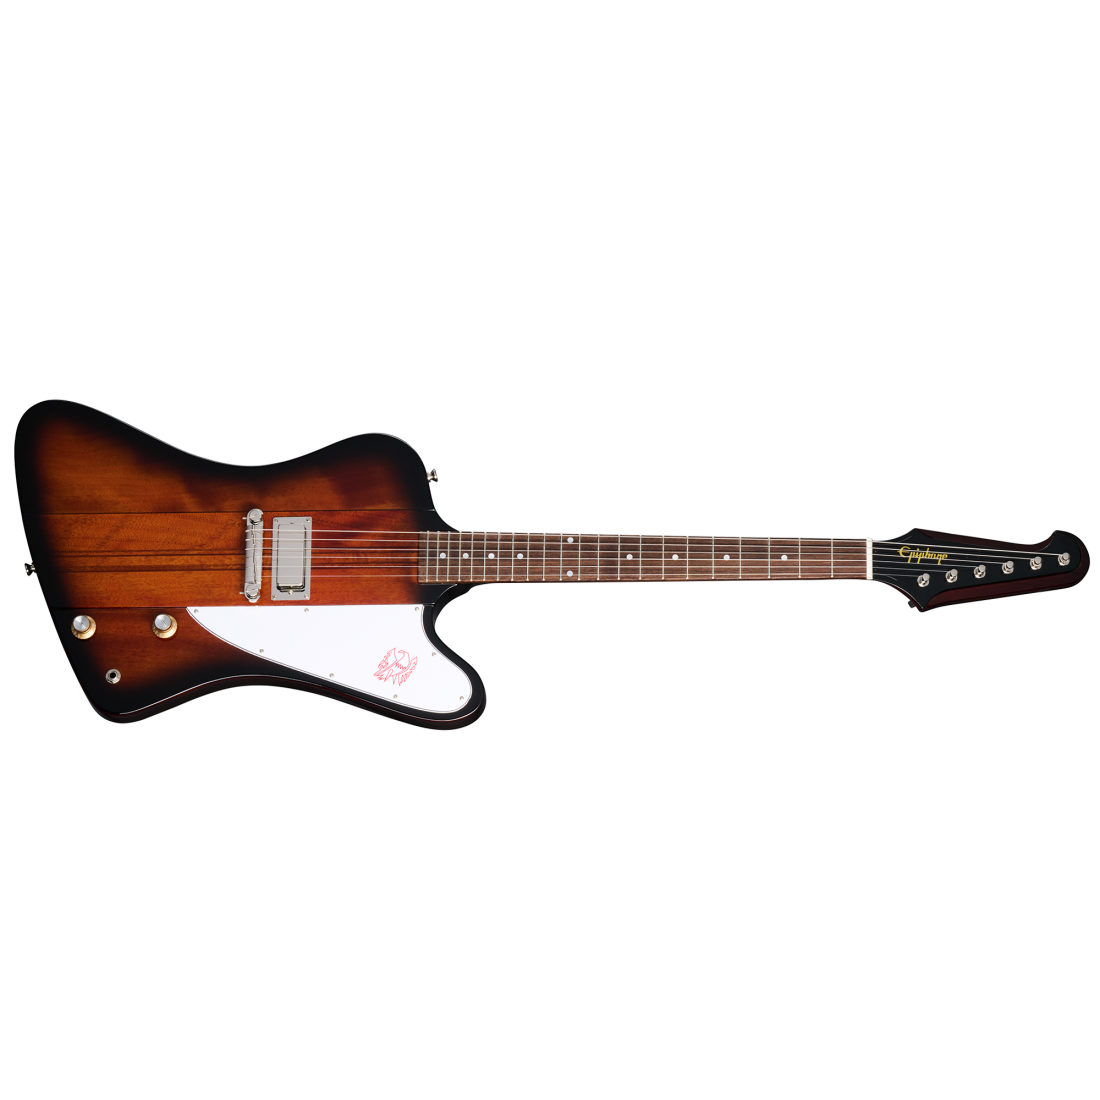 1963 Firebird I Electric Guitar with Hardshell Case - Vintage Sunburst